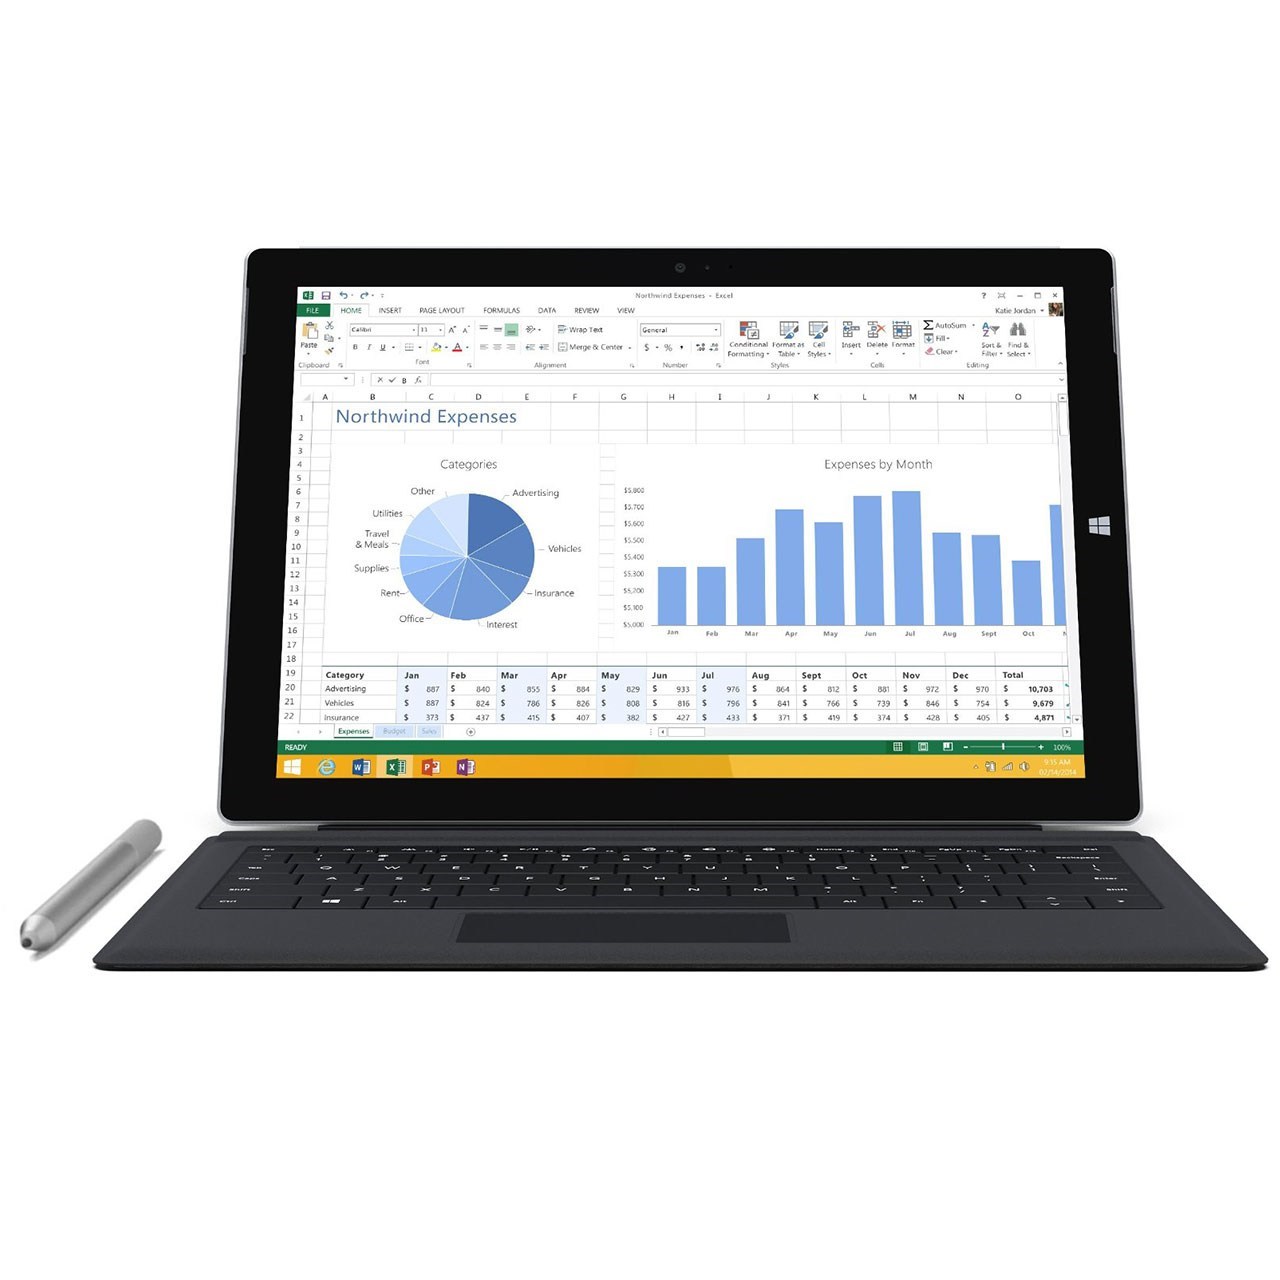 تبلت مایکروسافت مدل Surface Pro 3 - A به همراه کیبورد ظرفیت 64 گیگابایت